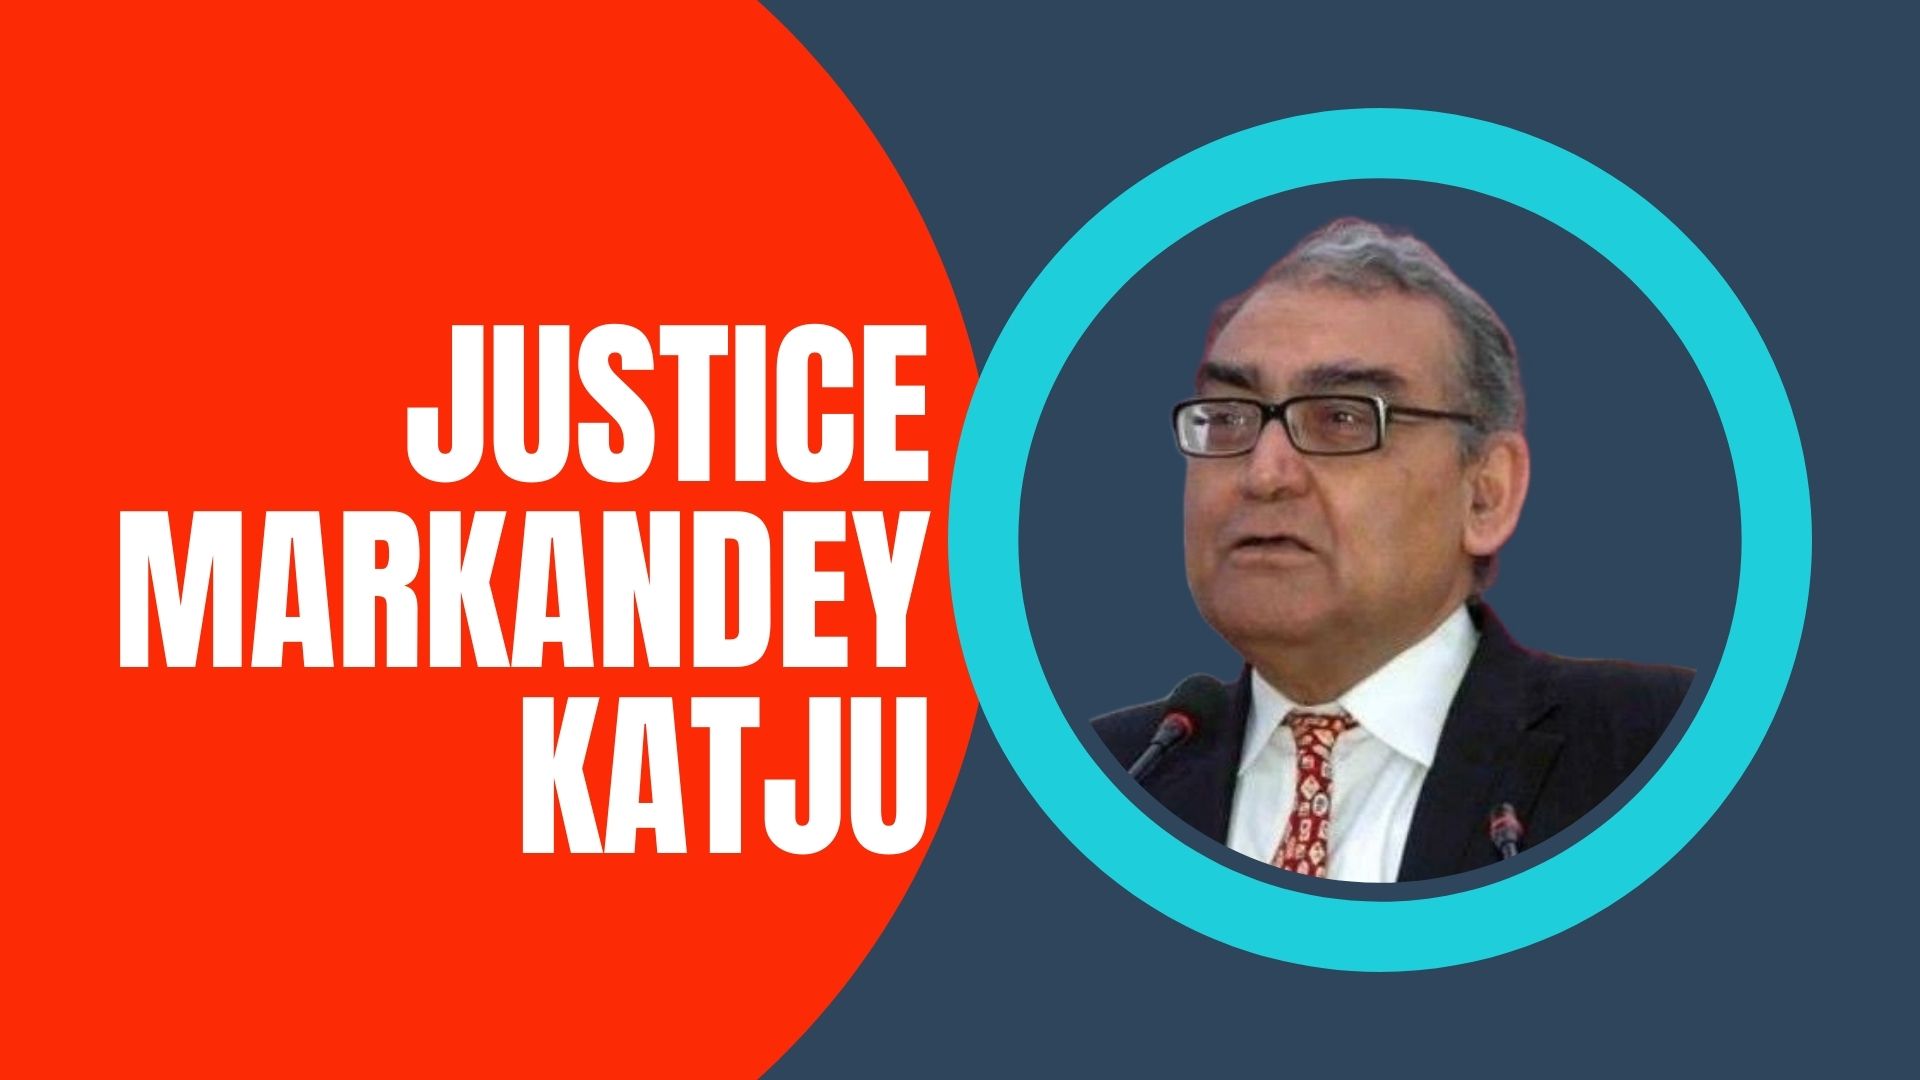 Justice Markandey Katju